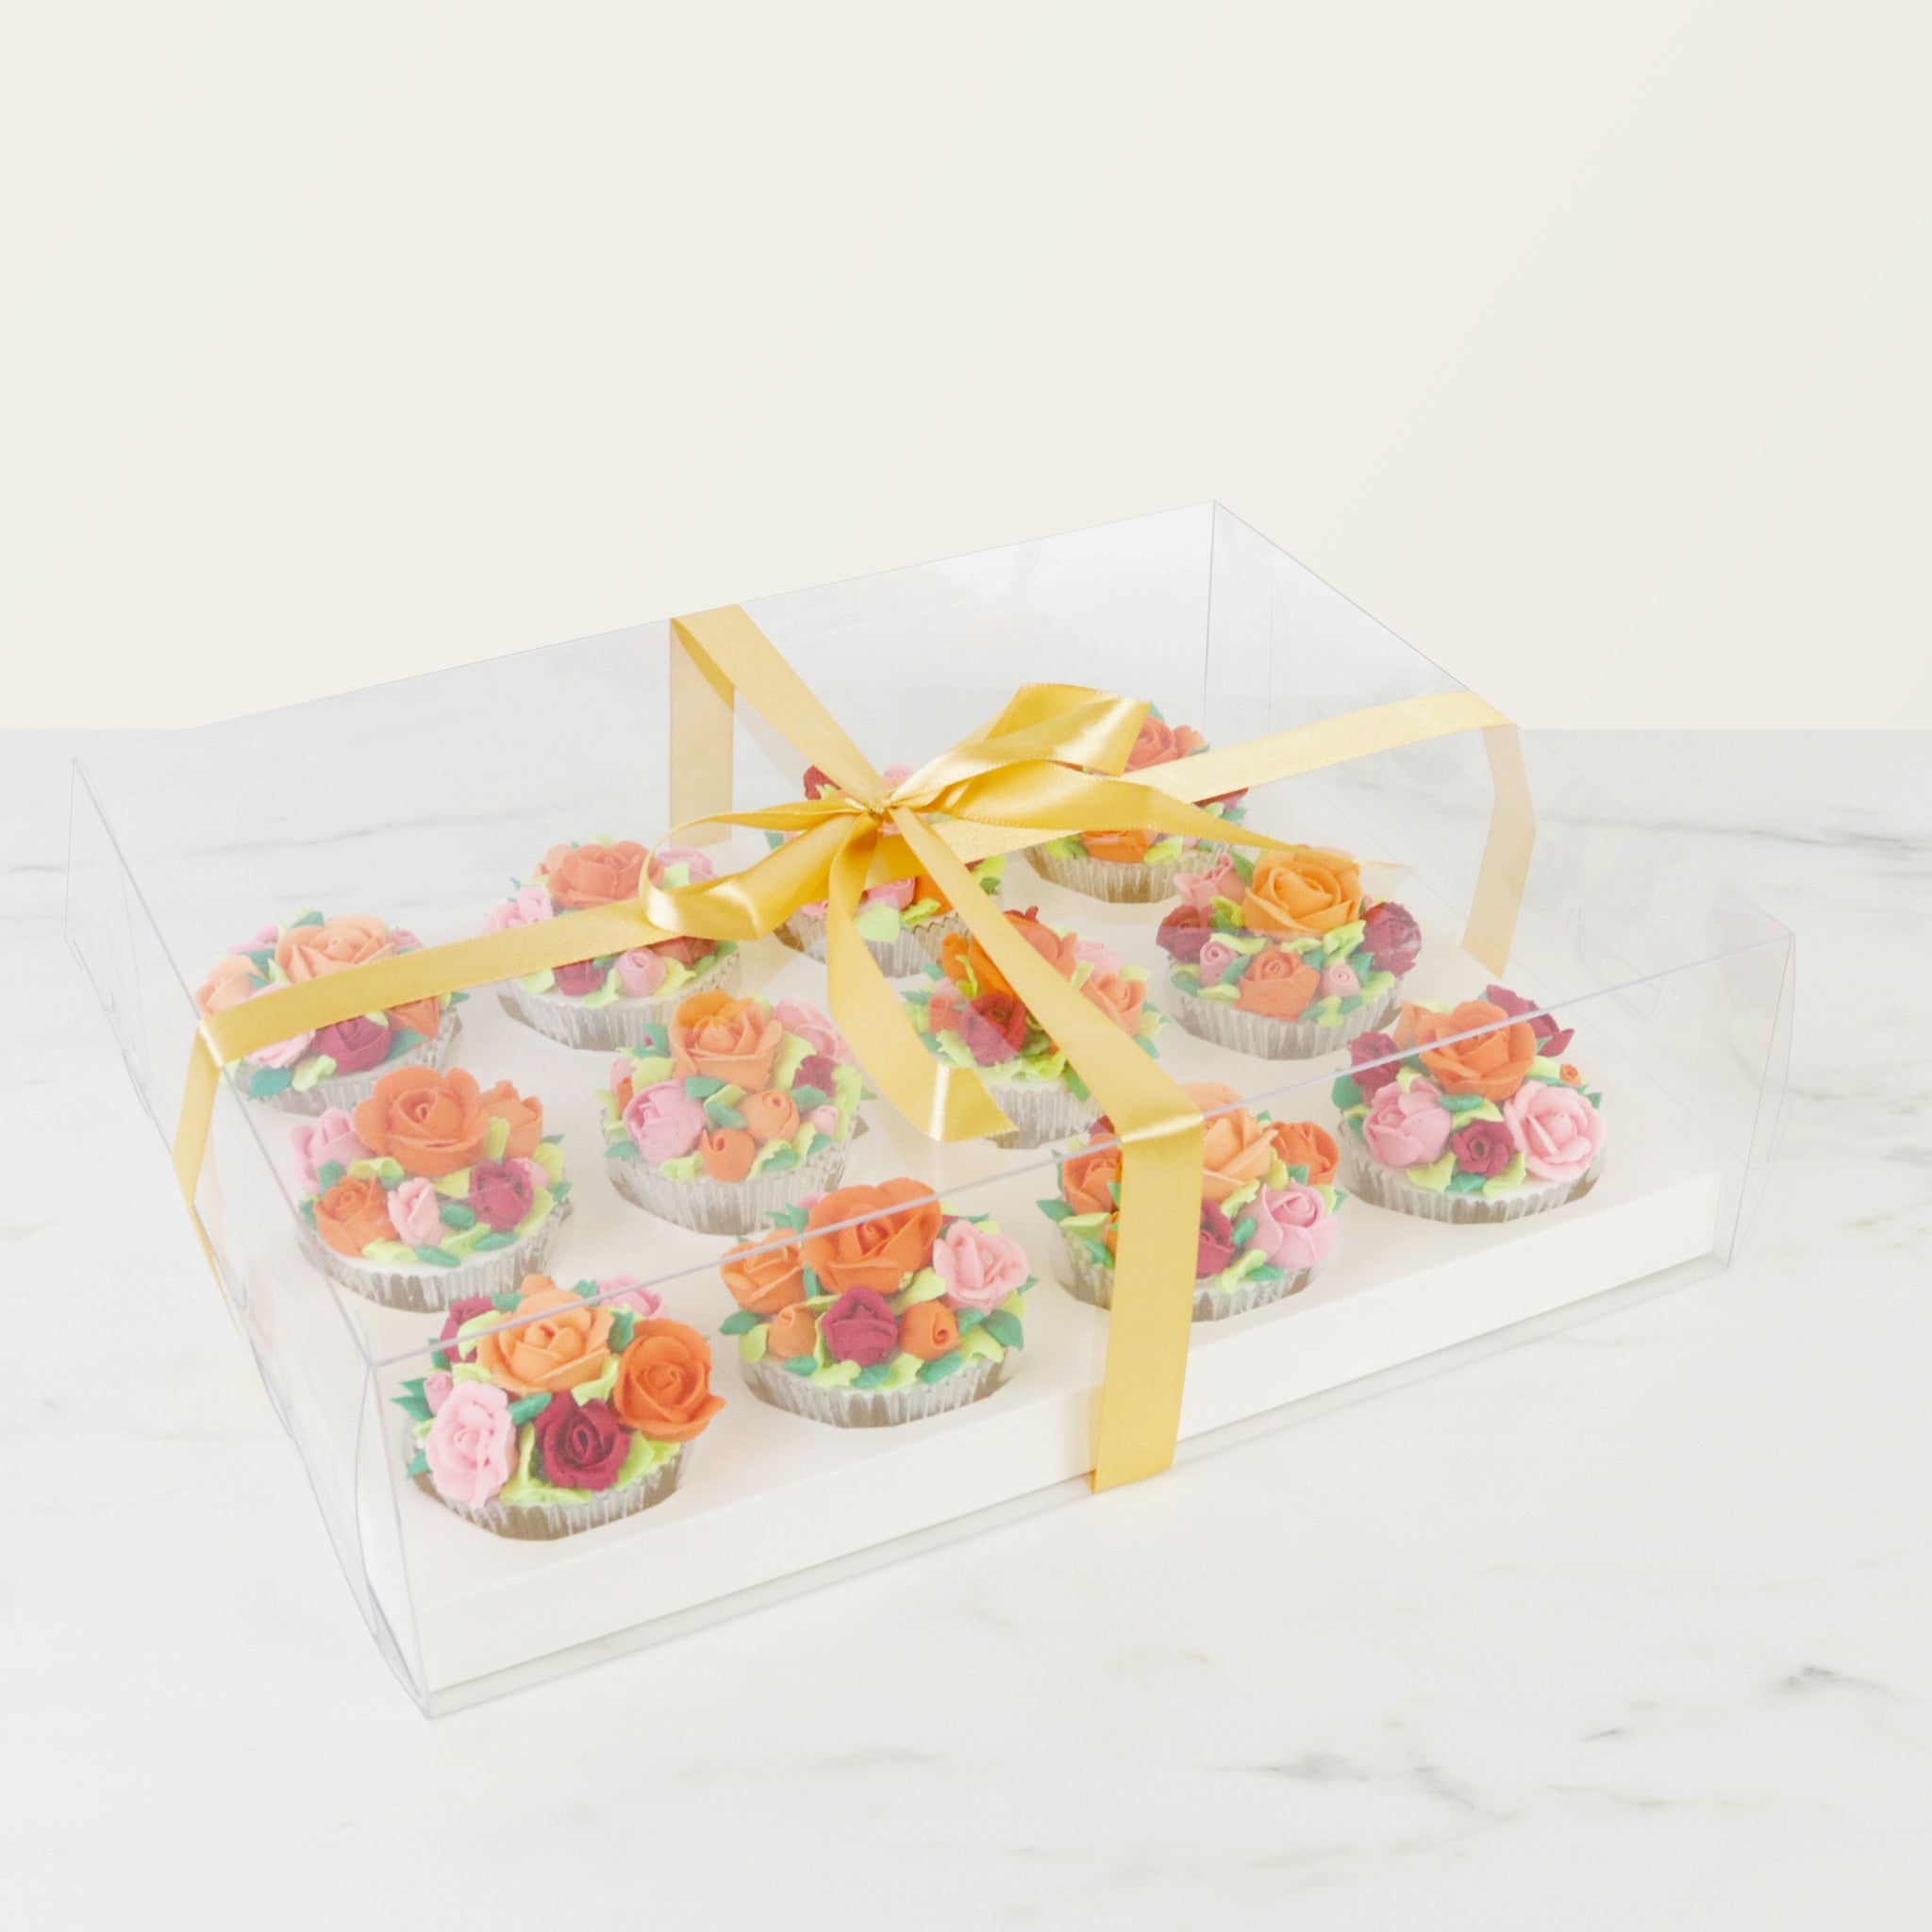 PME Crystal Cupcake Box